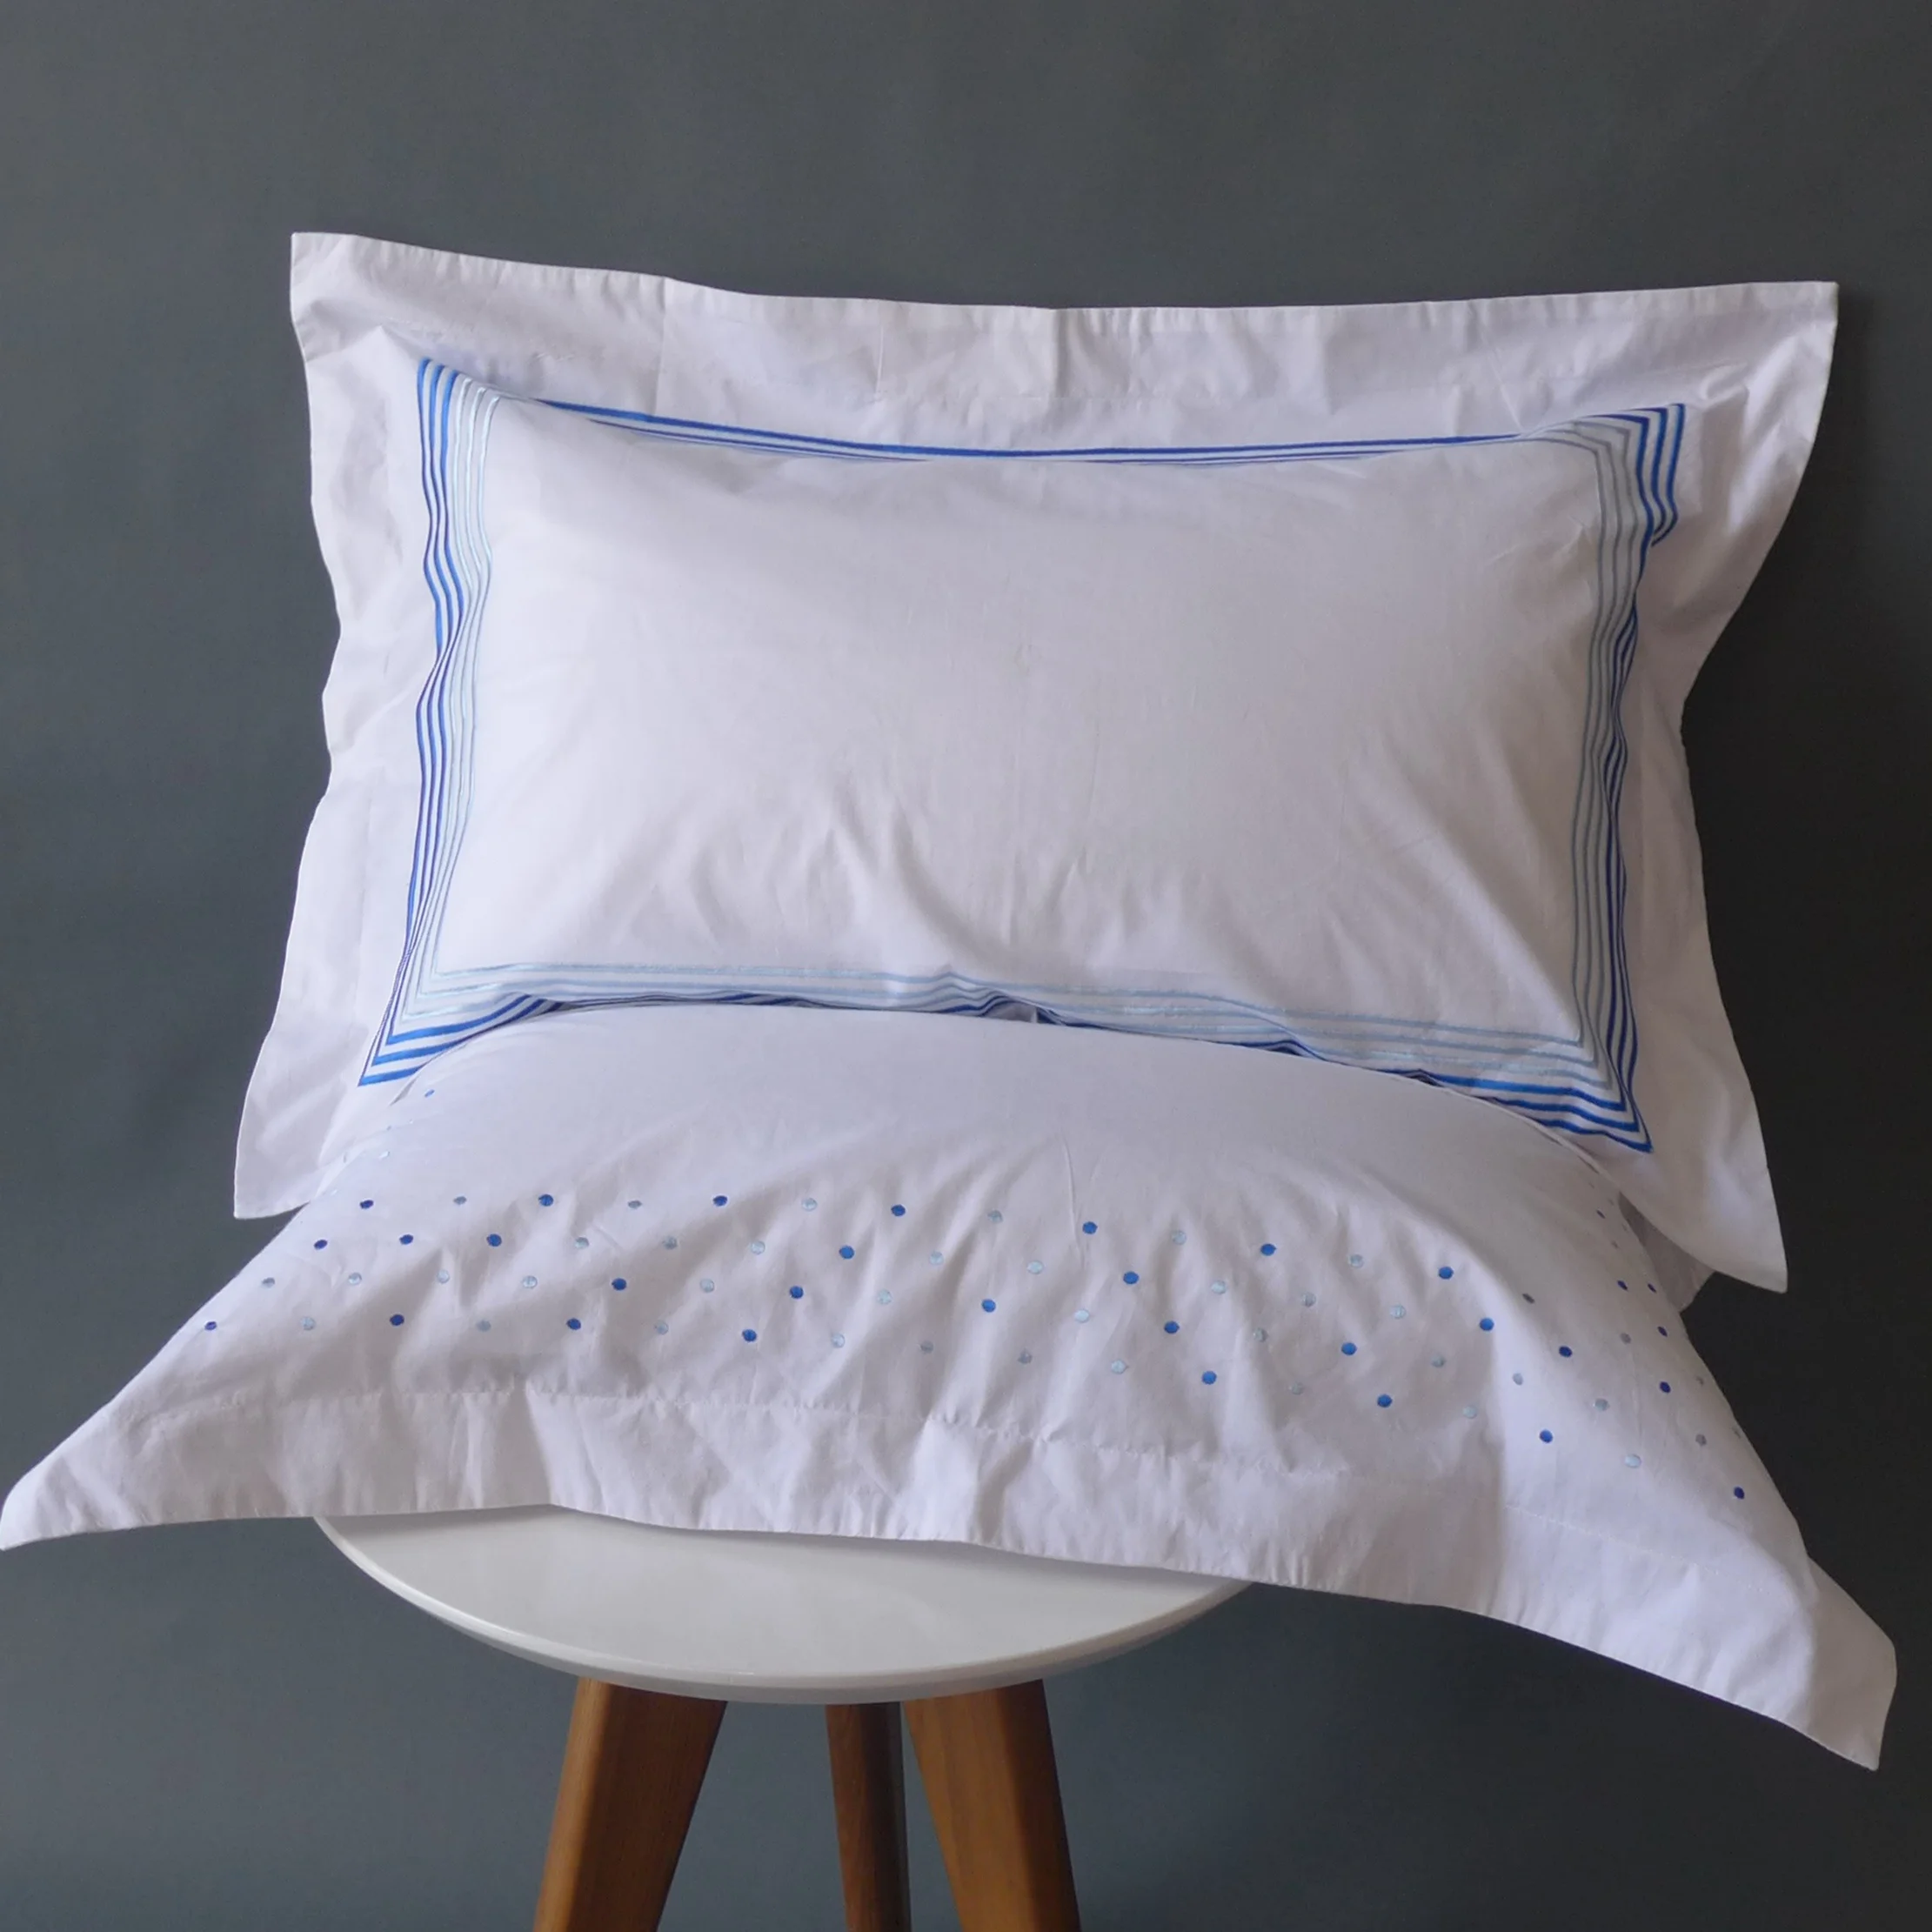 100% cotton duvet cover set with embroidery pillowcase pillowsham